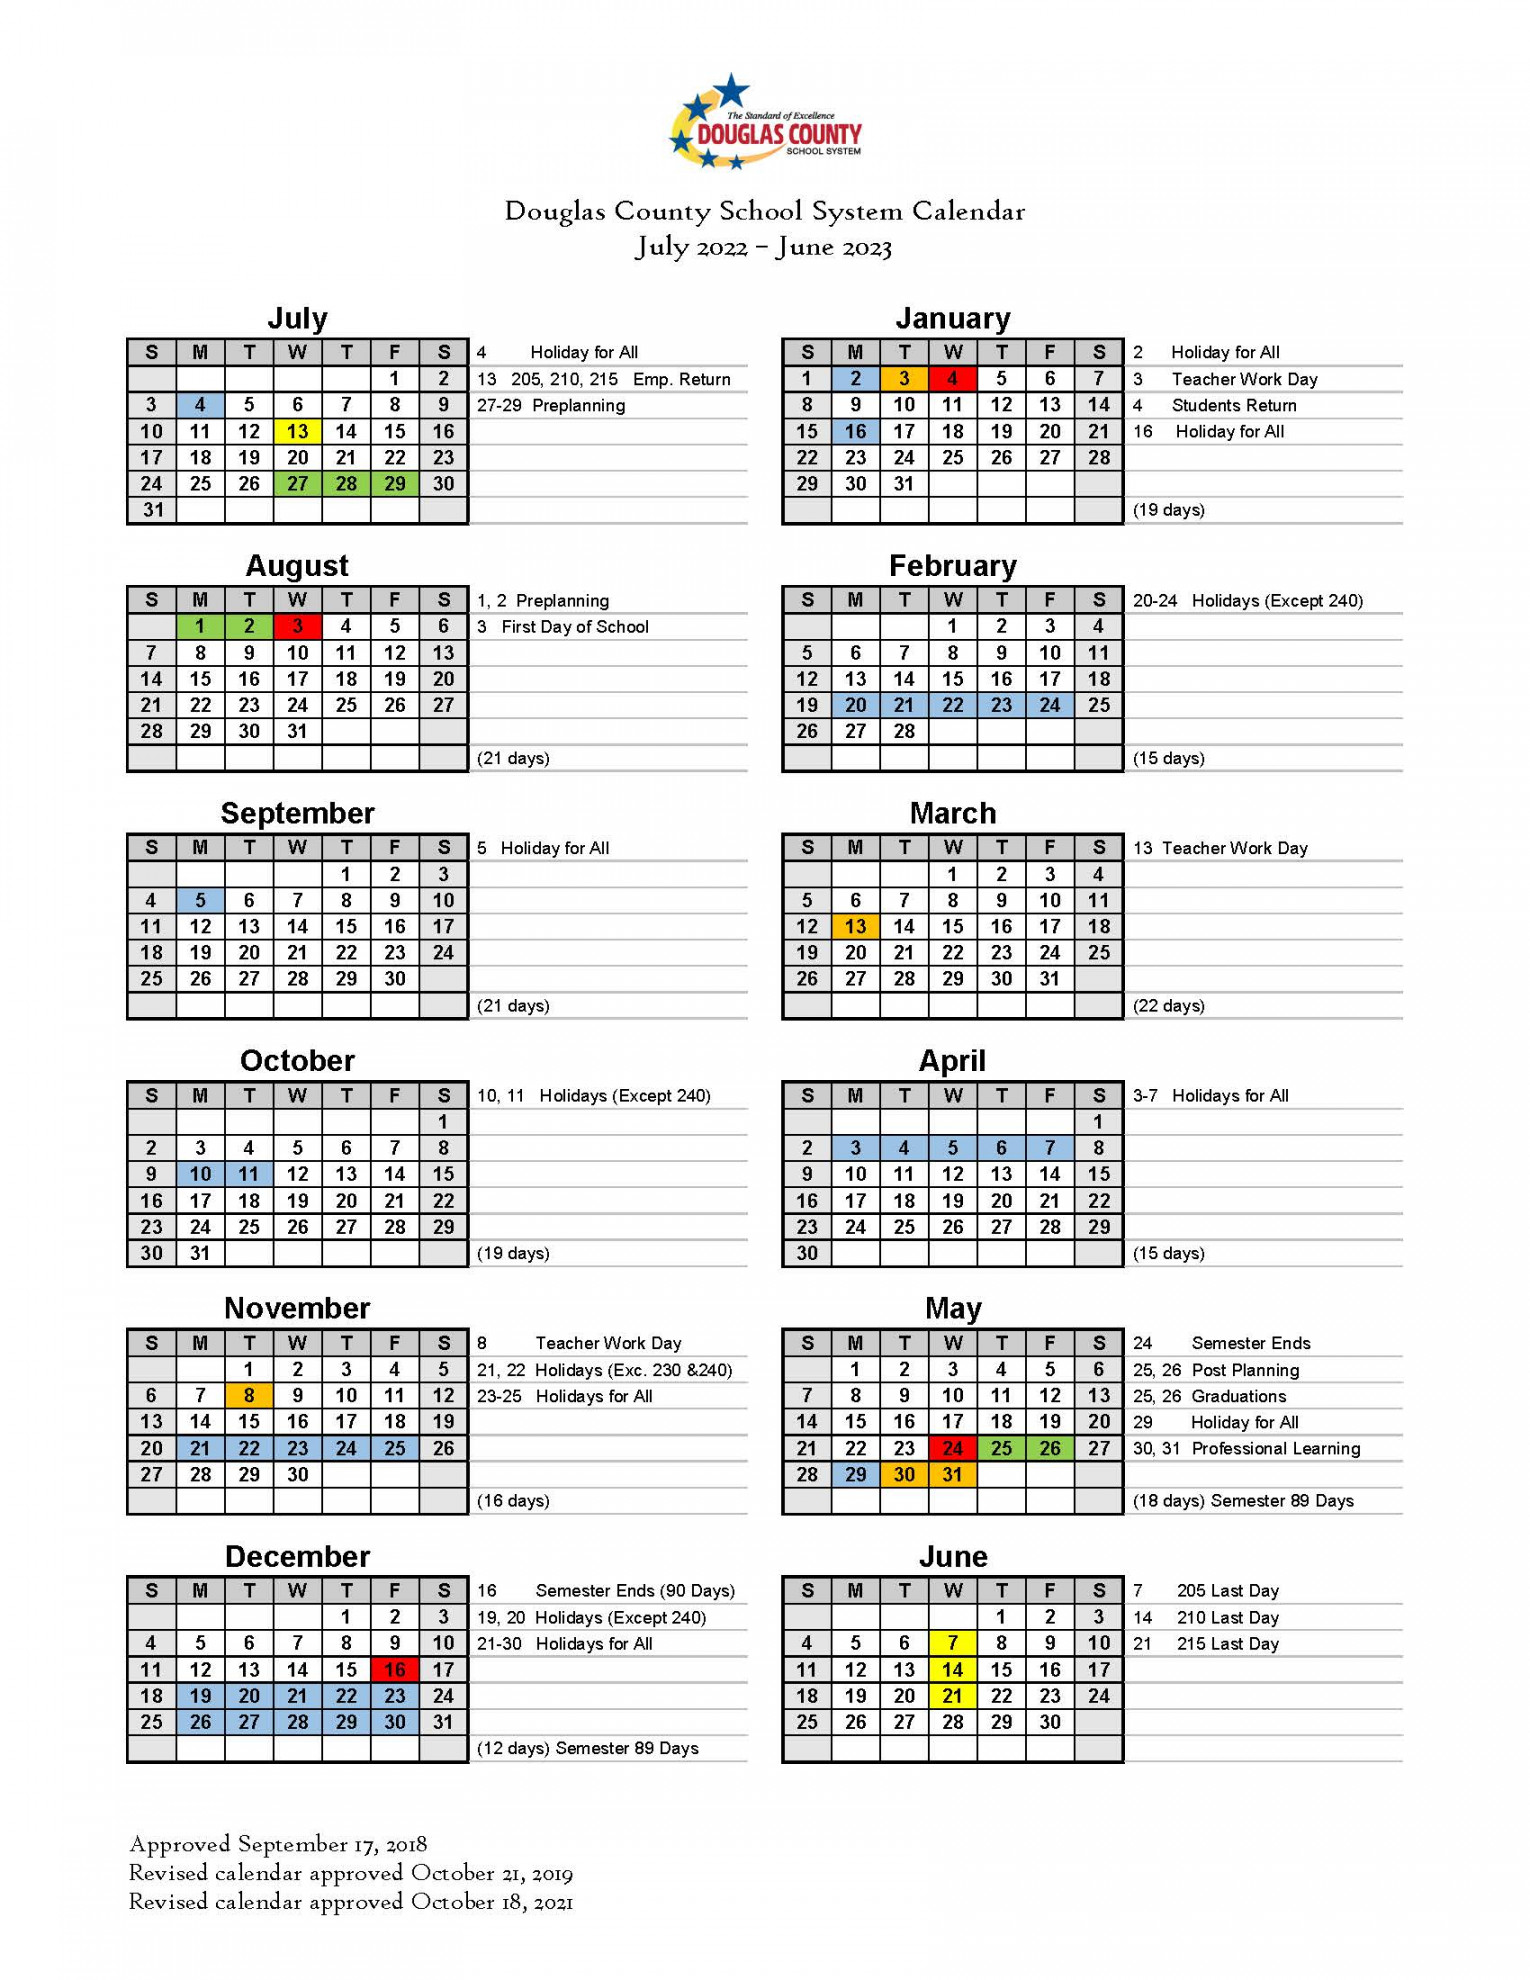 Revised Calendar for - - Douglas County School System